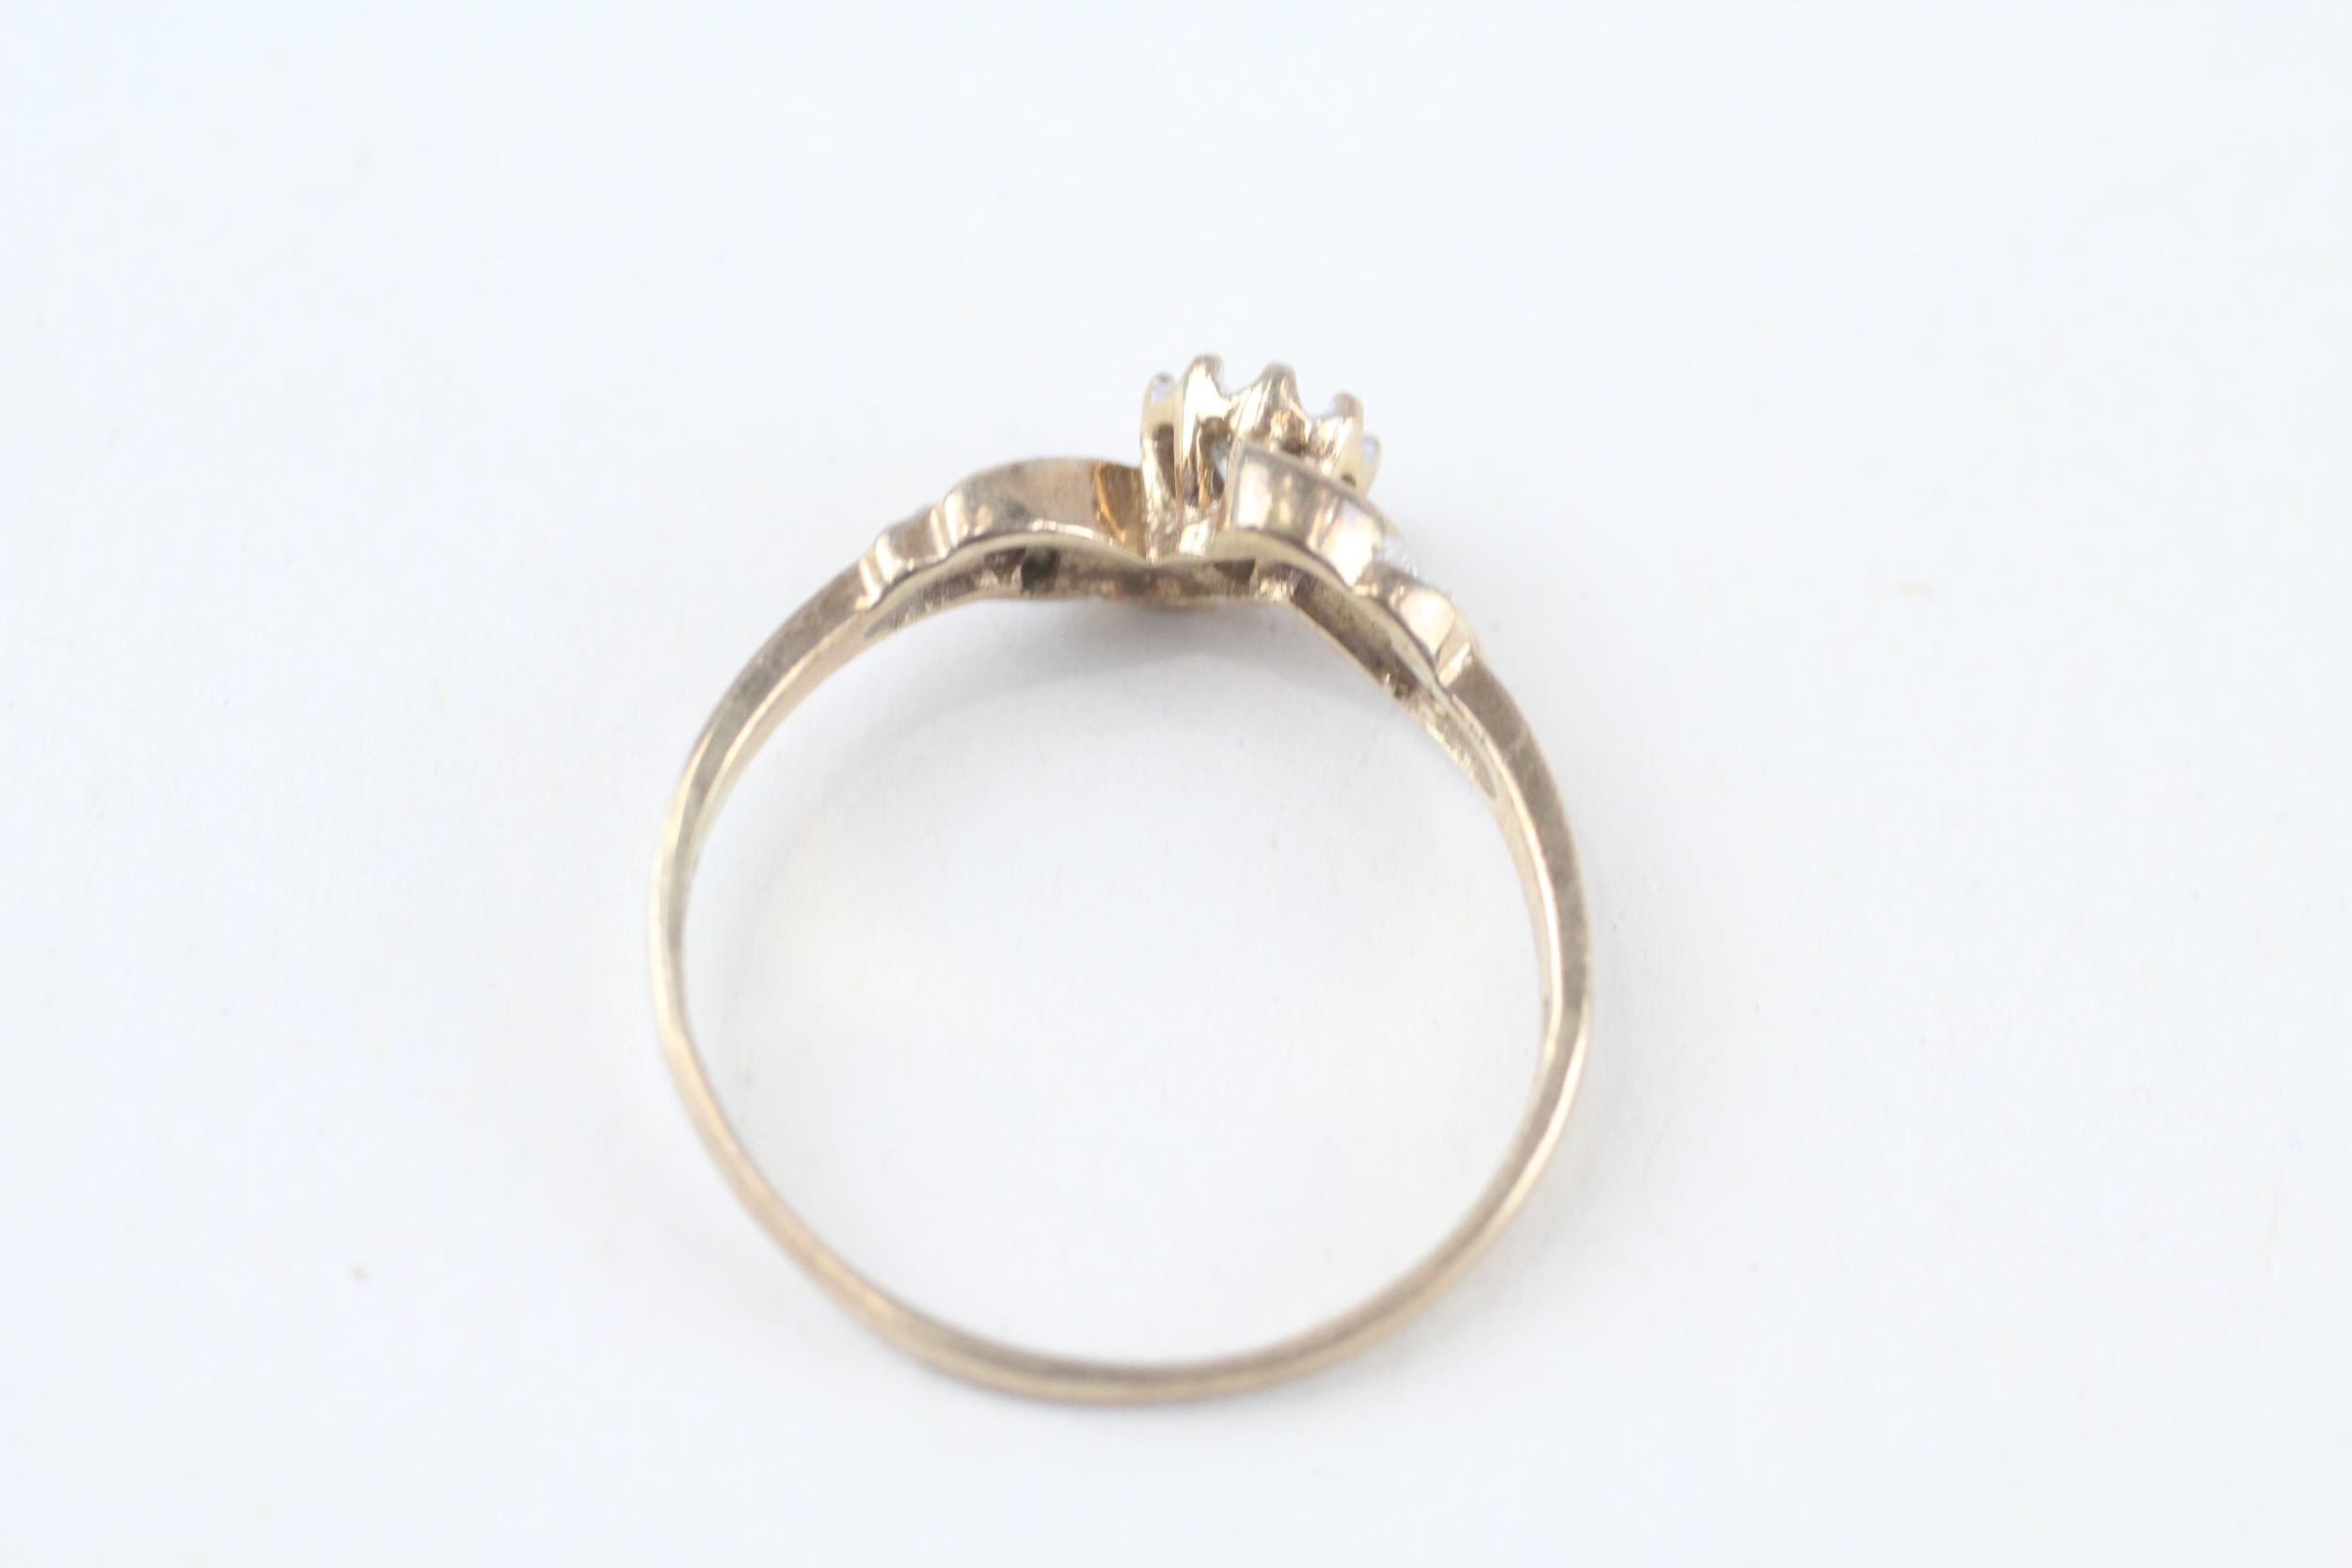 9ct gold round brilliant cut diamond single stone ring with diamond set shank (1.9g) Size P 1/2 - Image 4 of 4